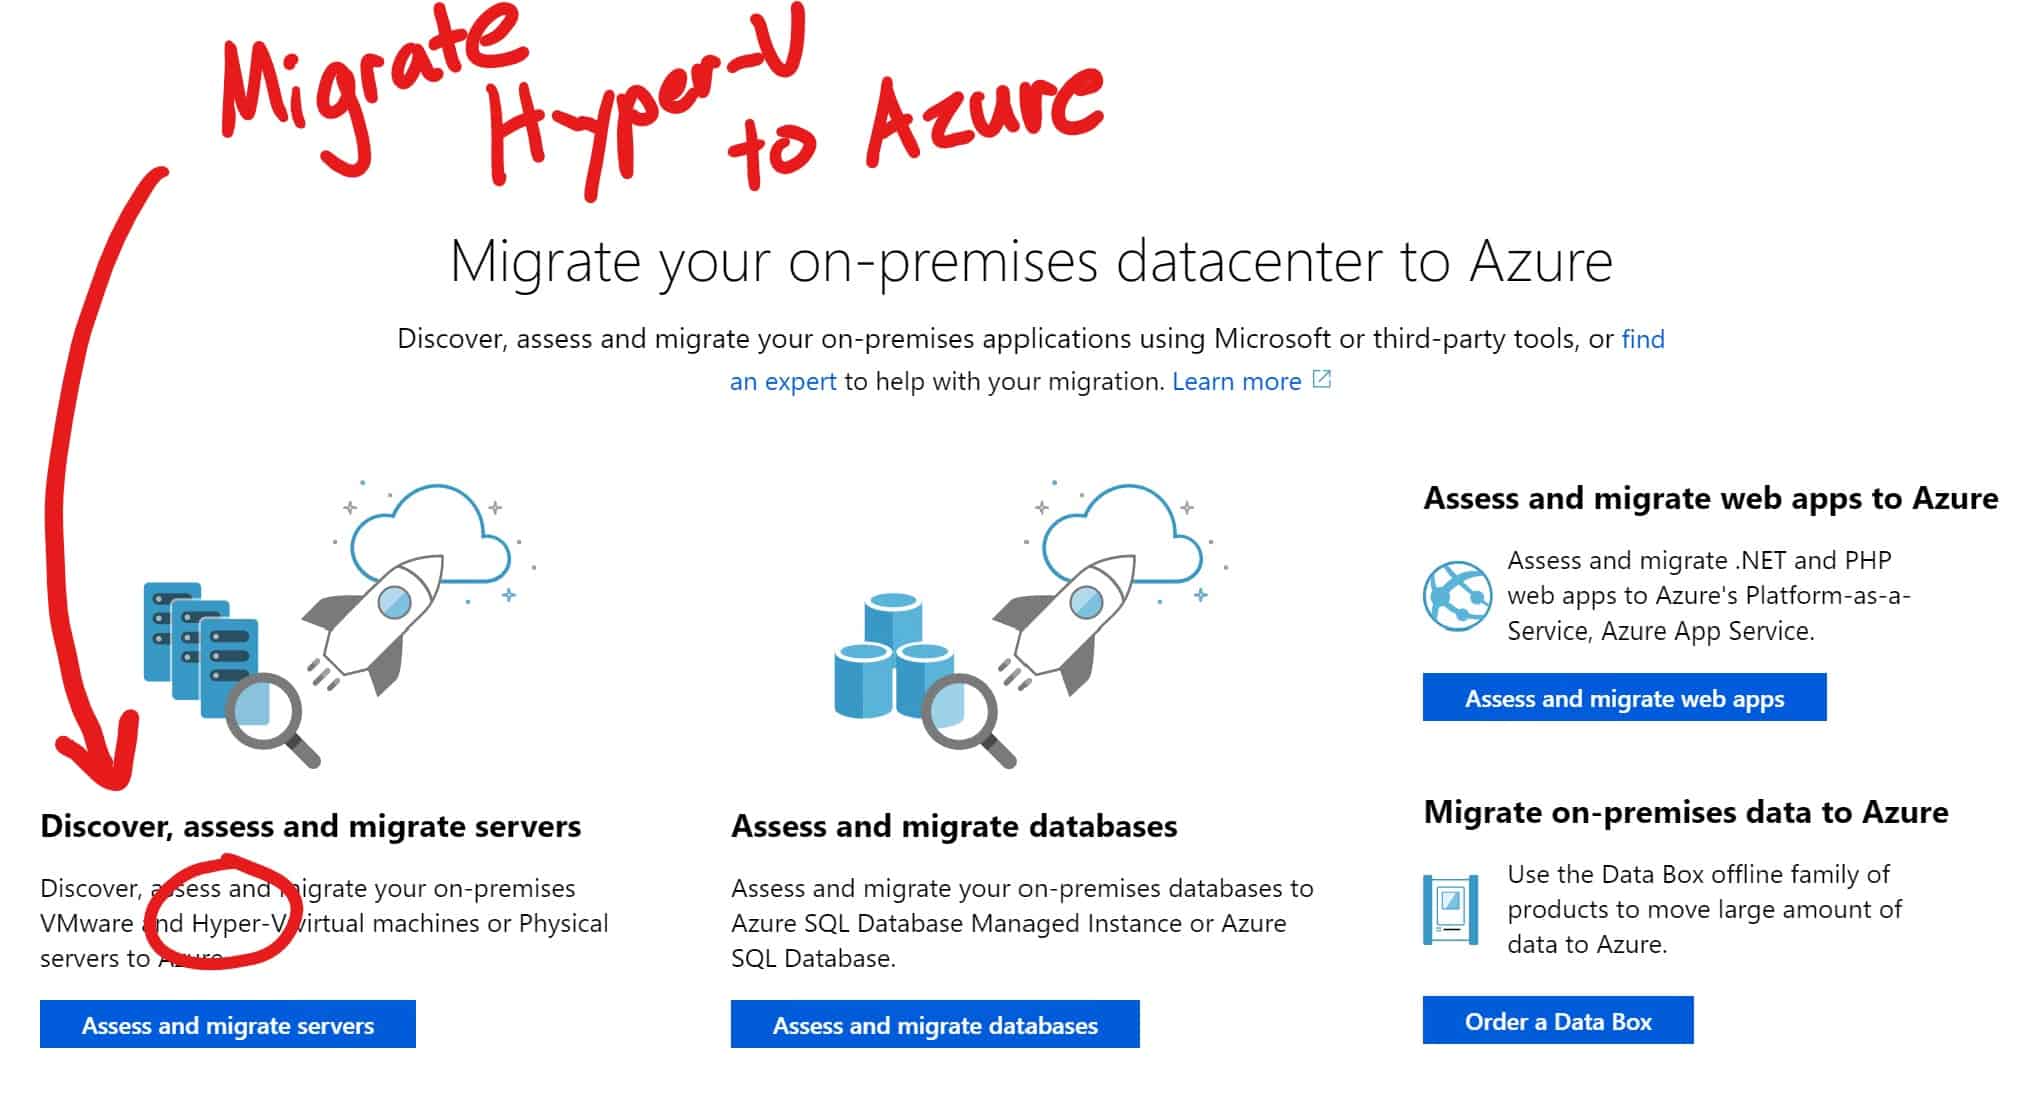 Migrate Hyper-V VMs to Azure using Azure Migrate